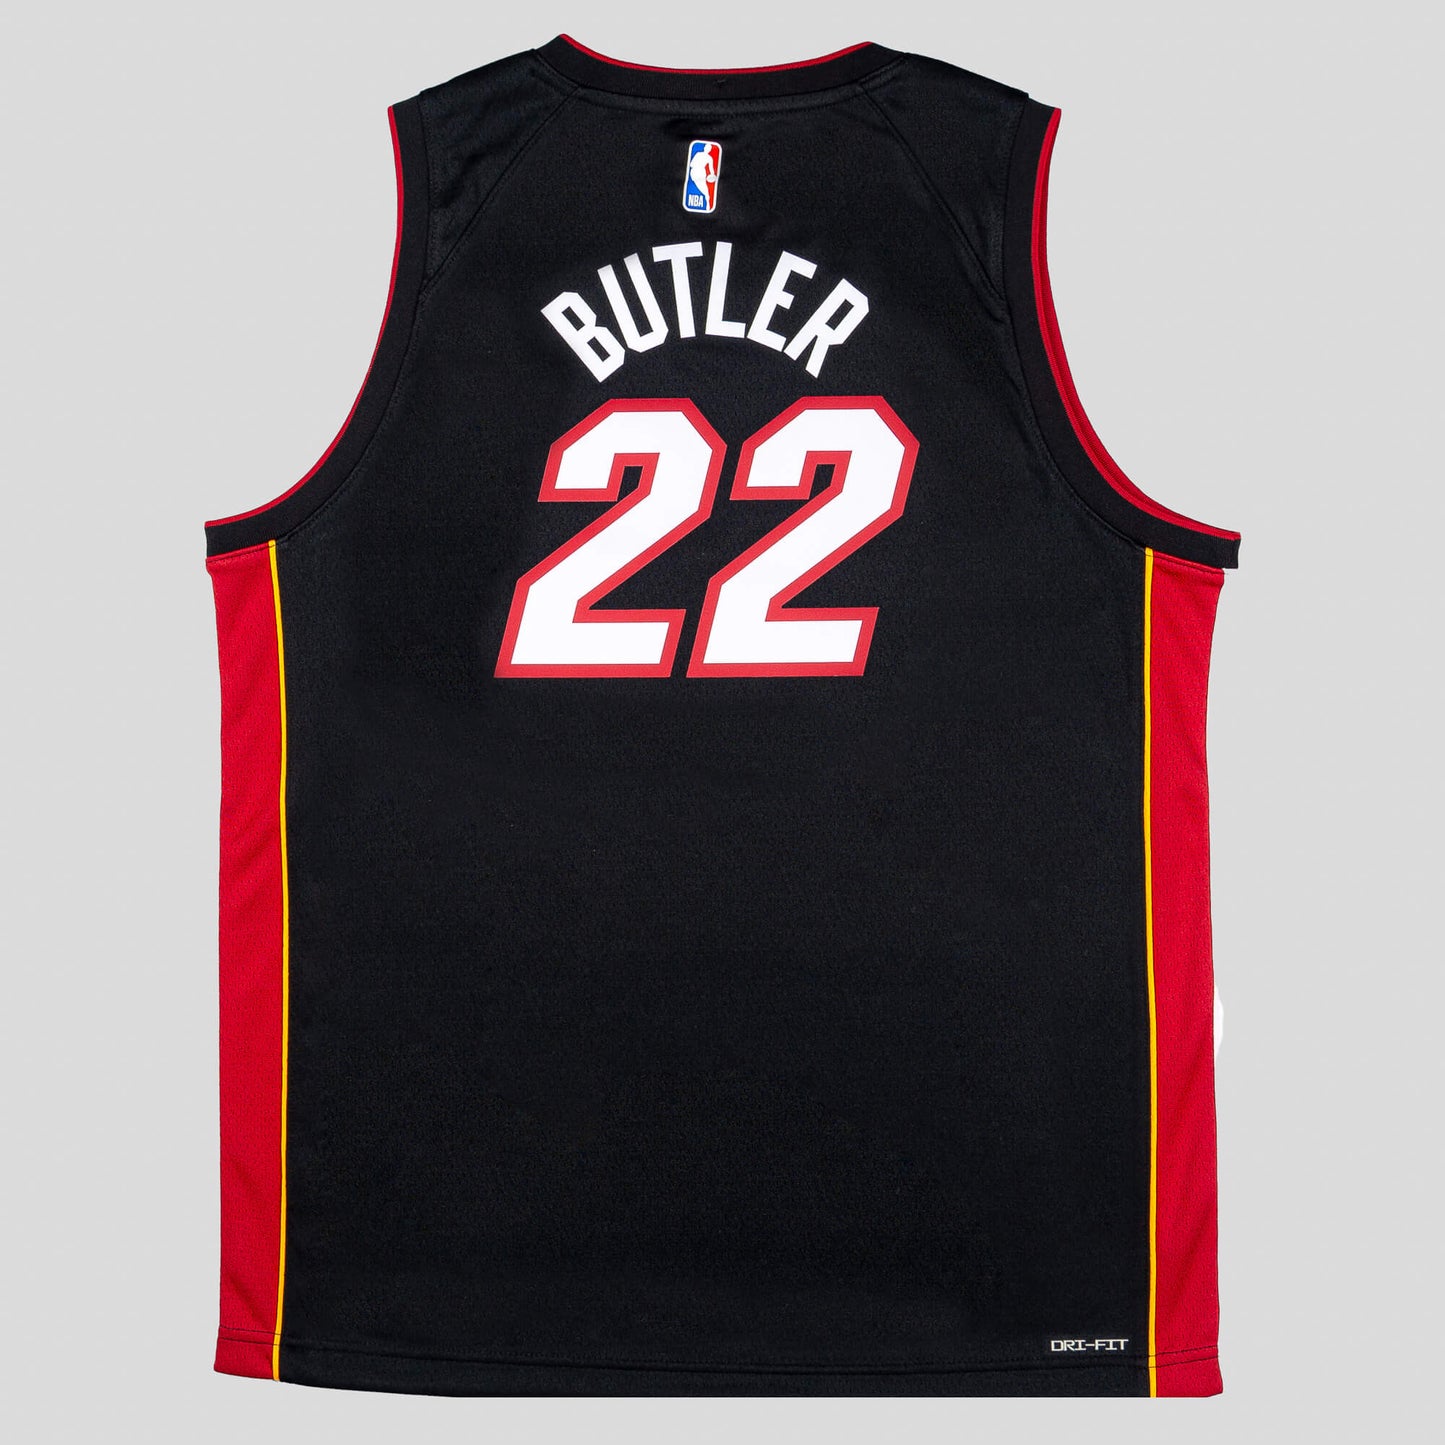 Nike Boys Icon Swingman Jersey - Player Miami Heat Jimmy Butler – Nr. 22 Black/Red